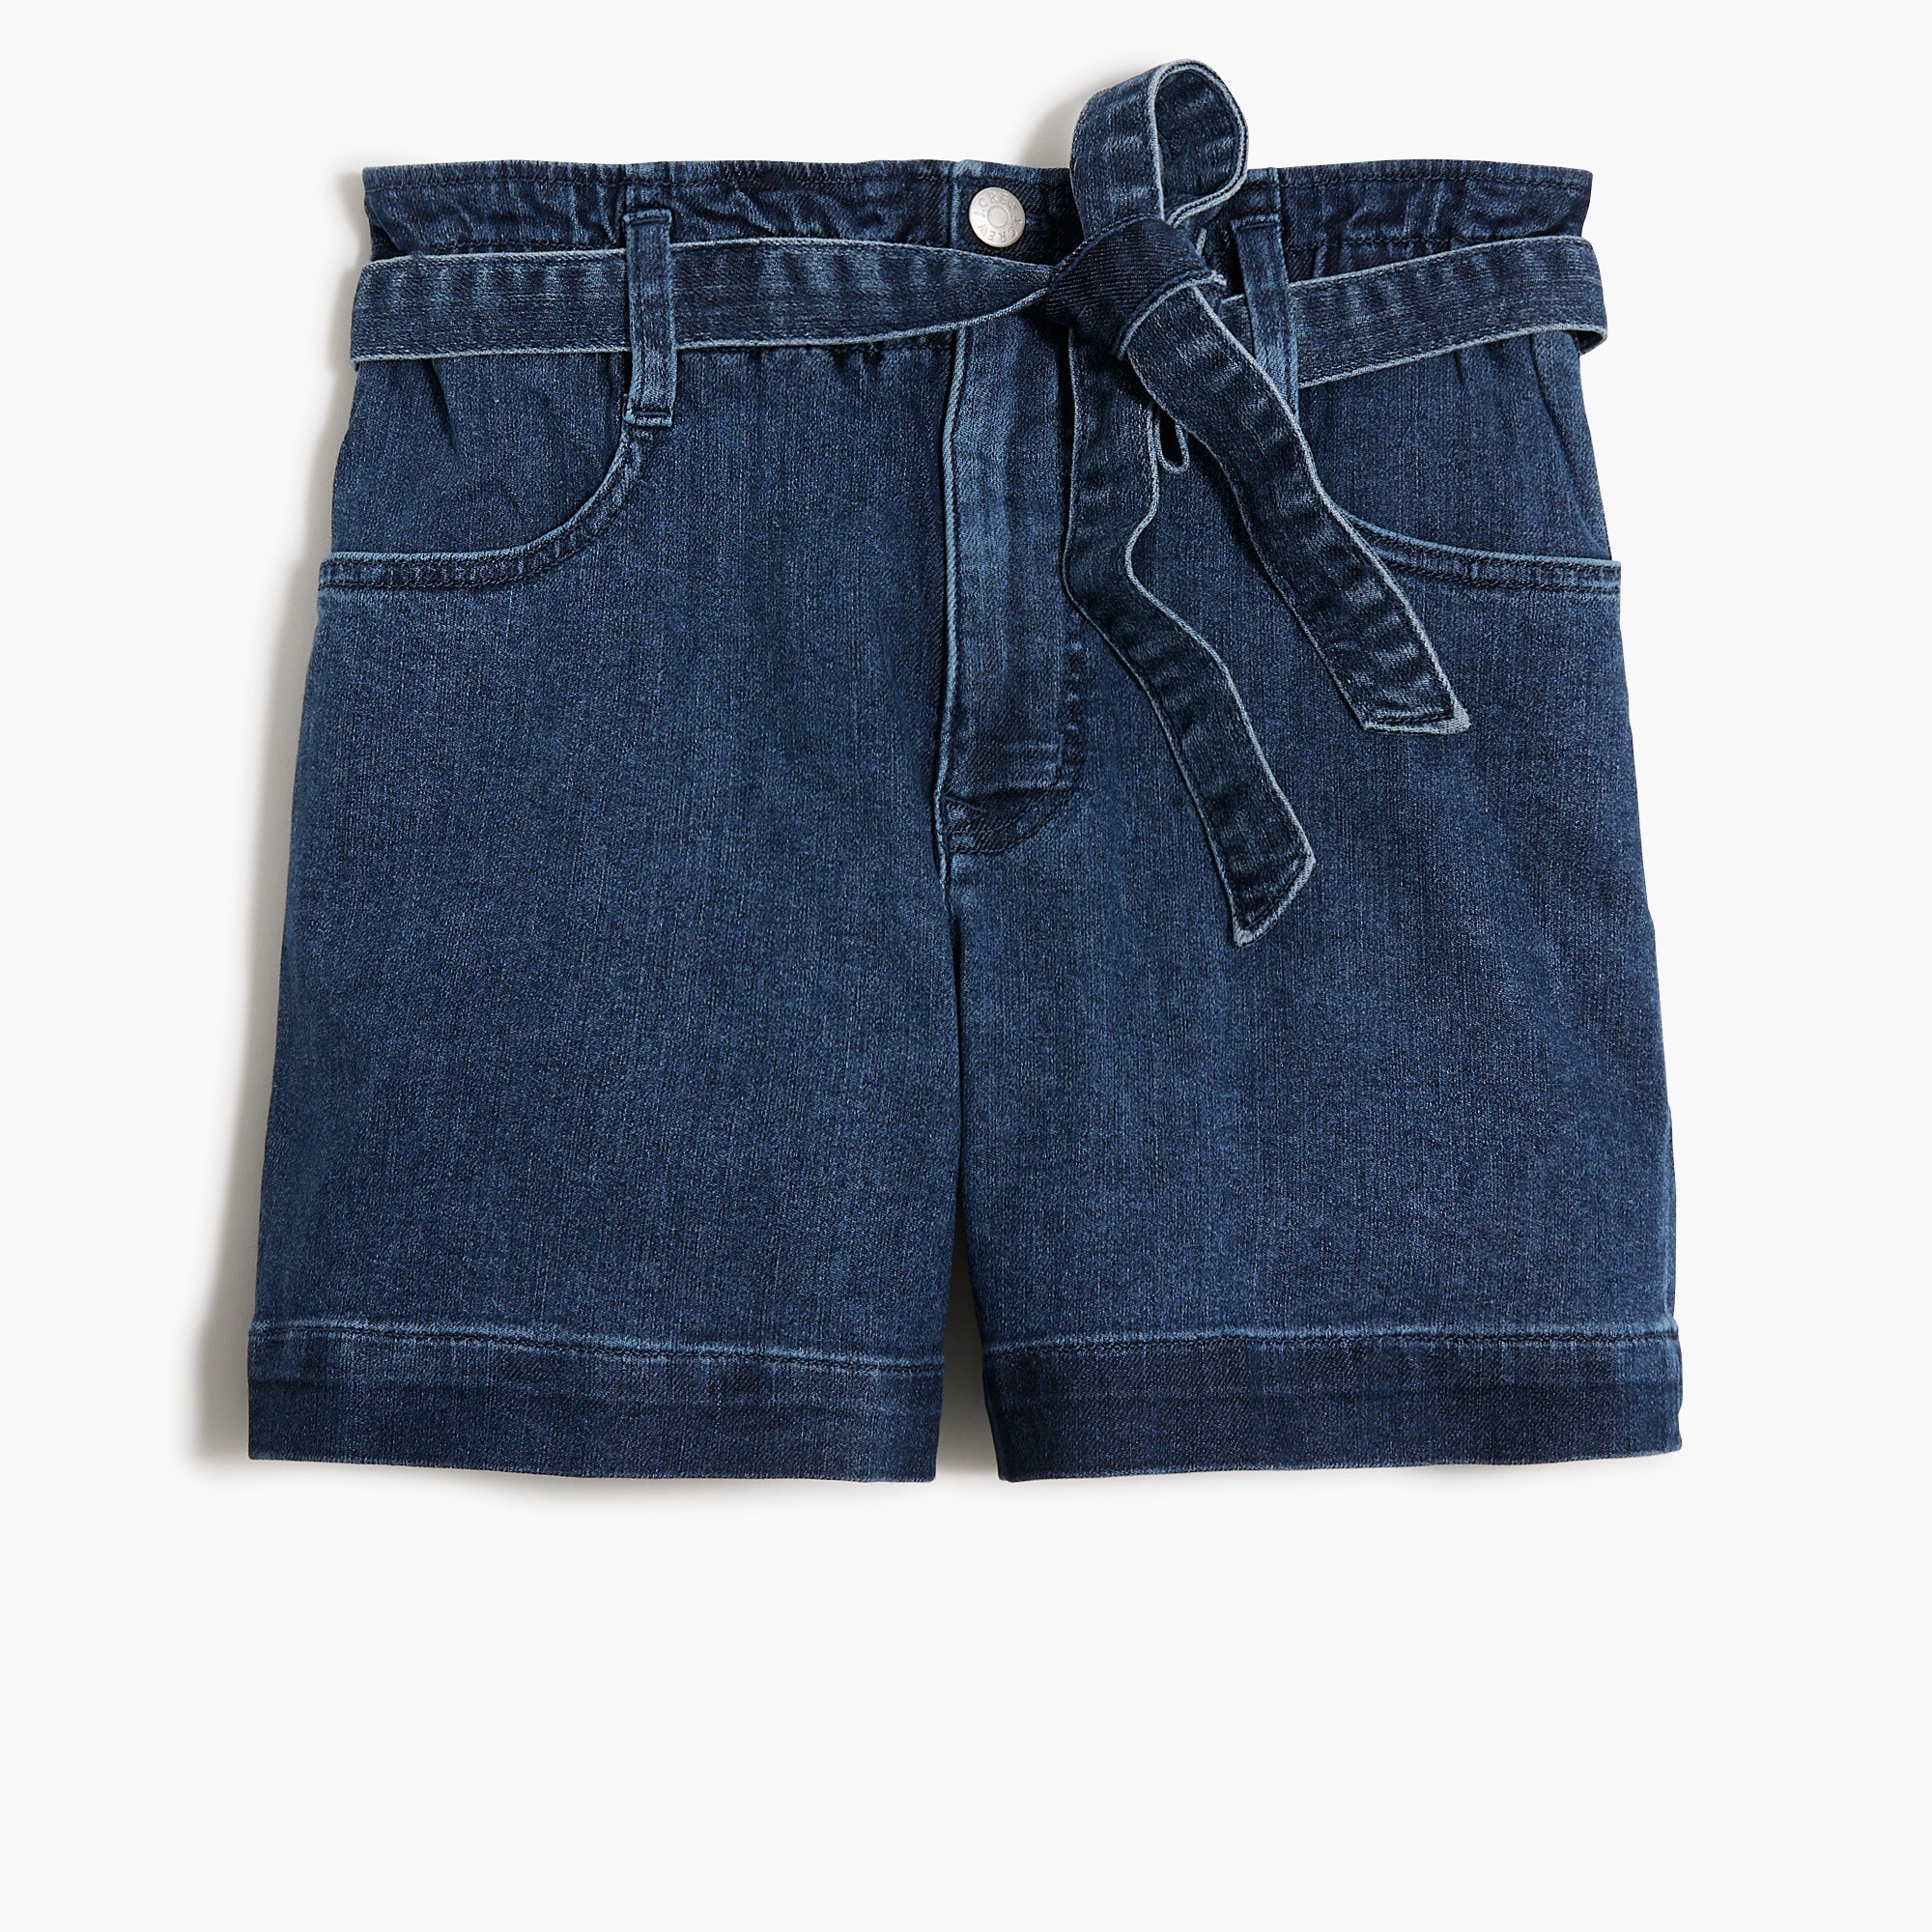  Paper-bag jean short